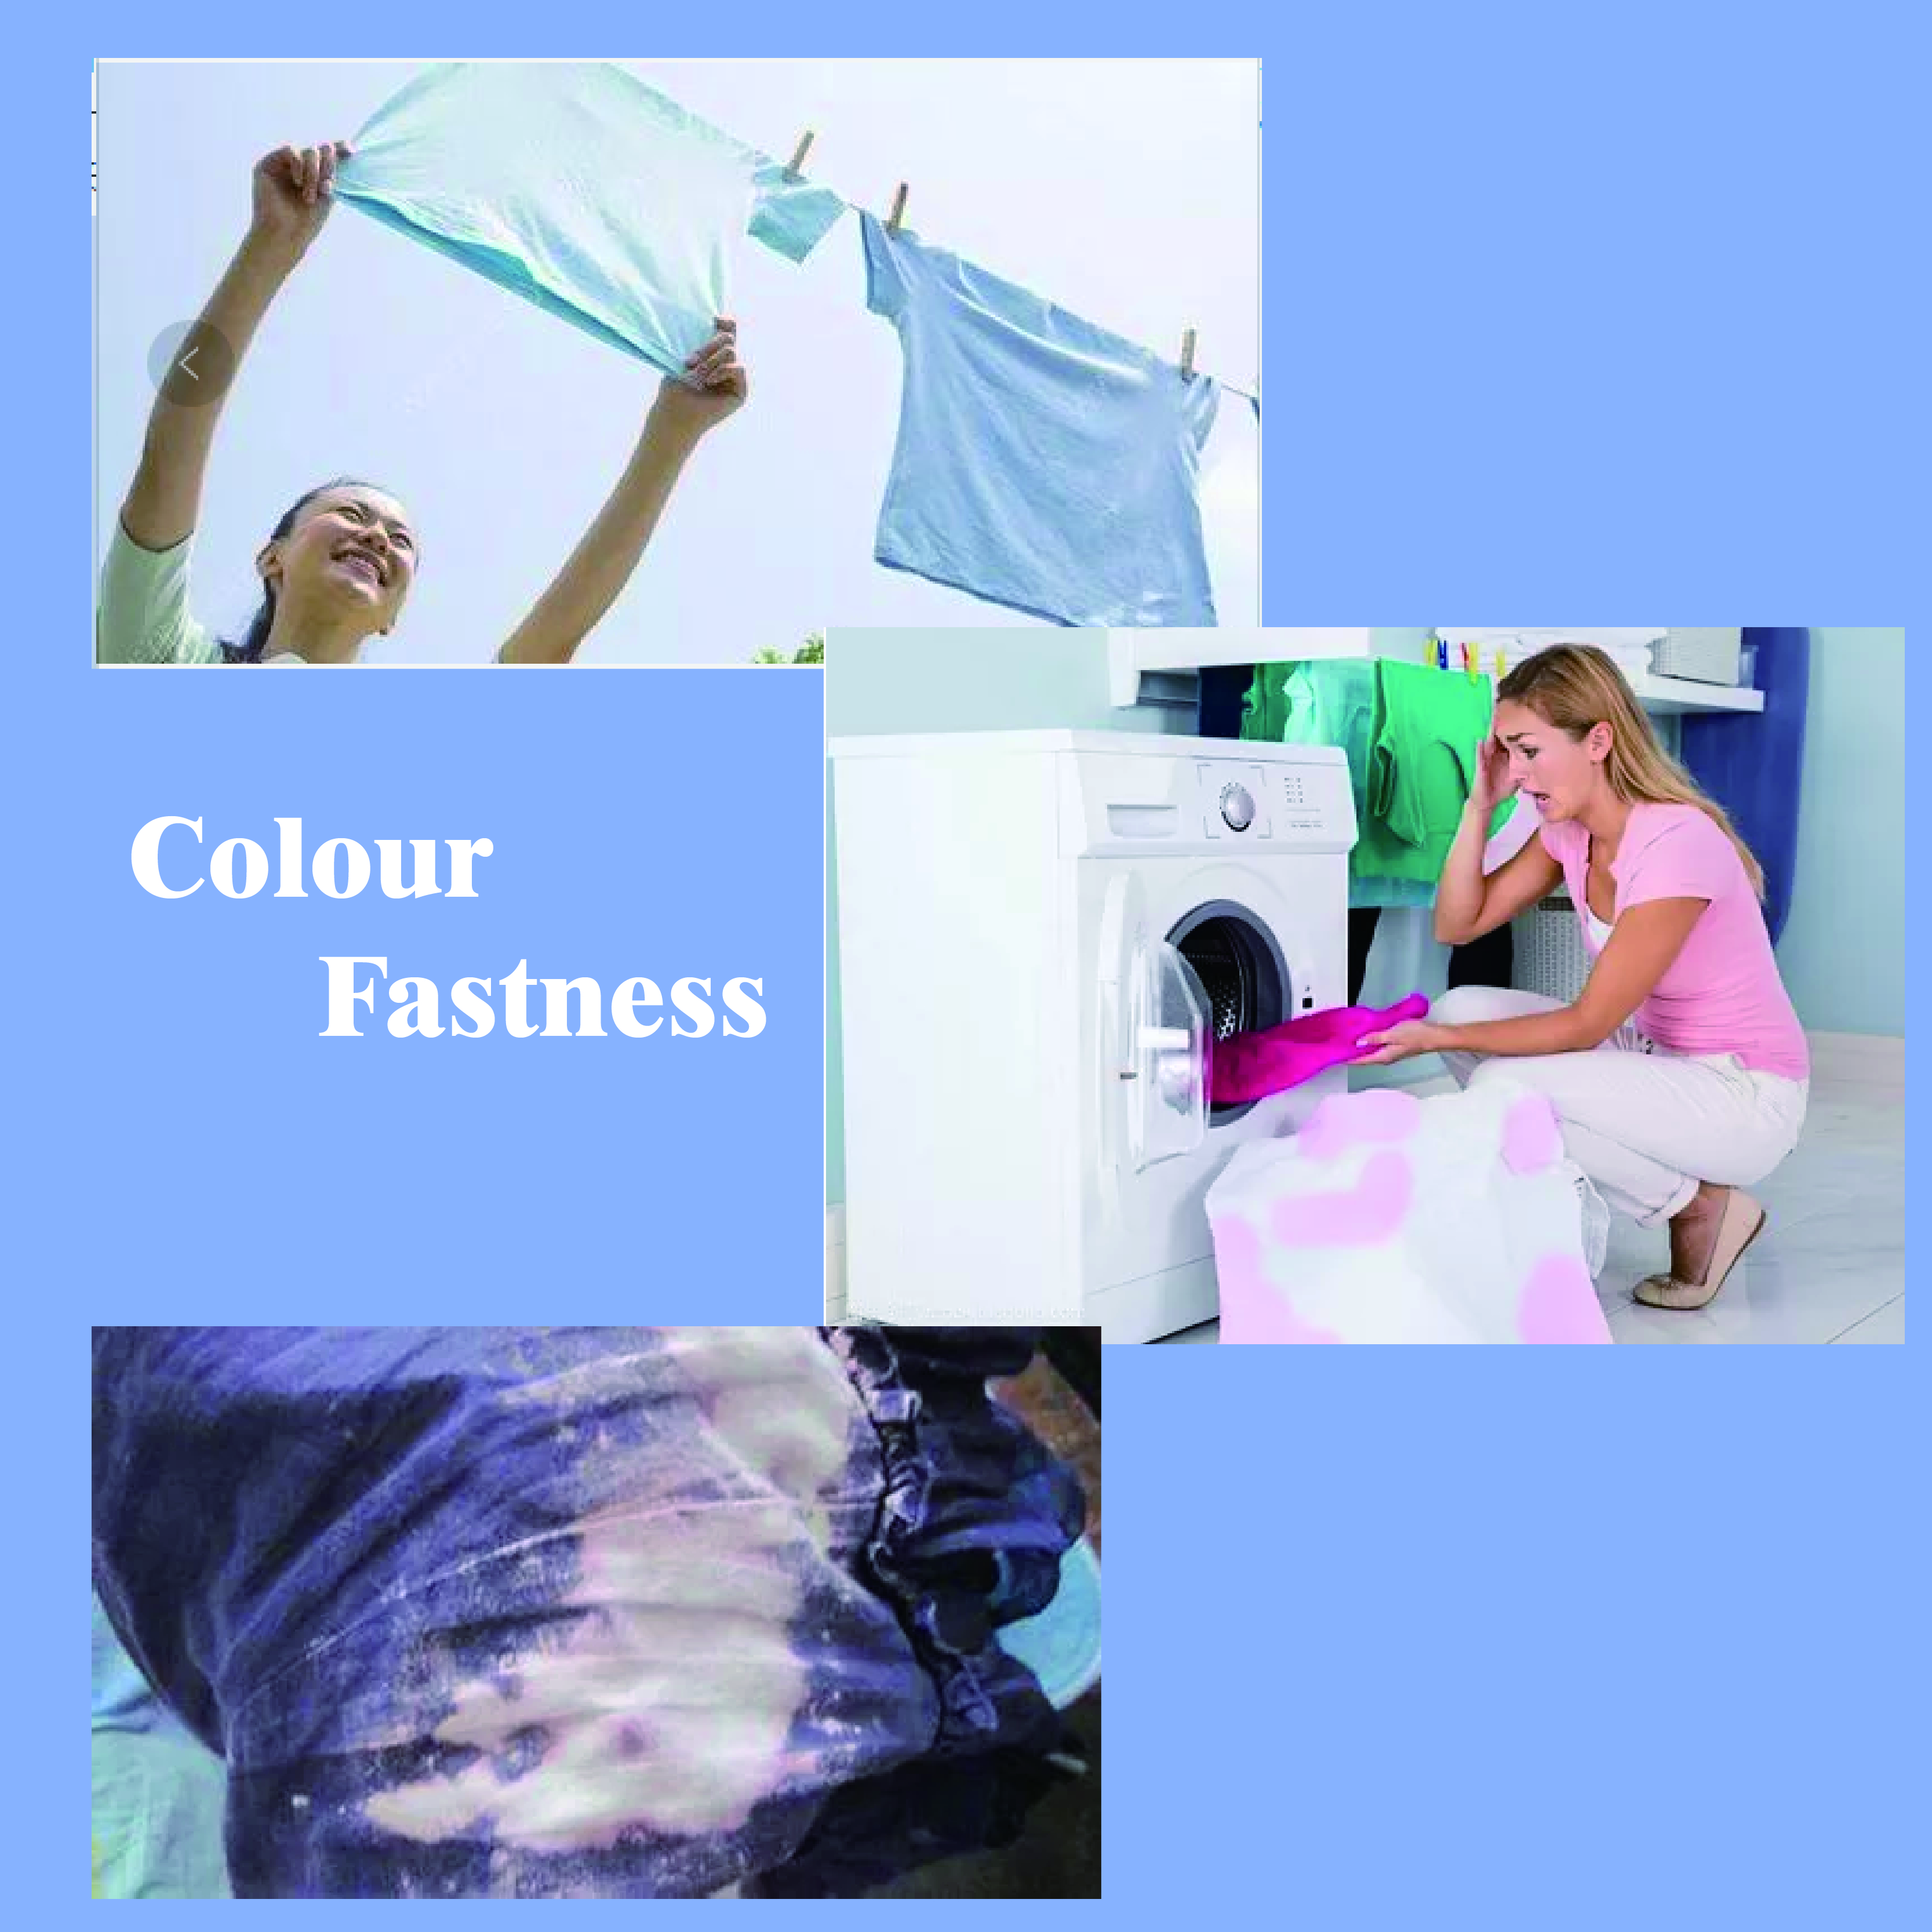 Colour fastness of textile